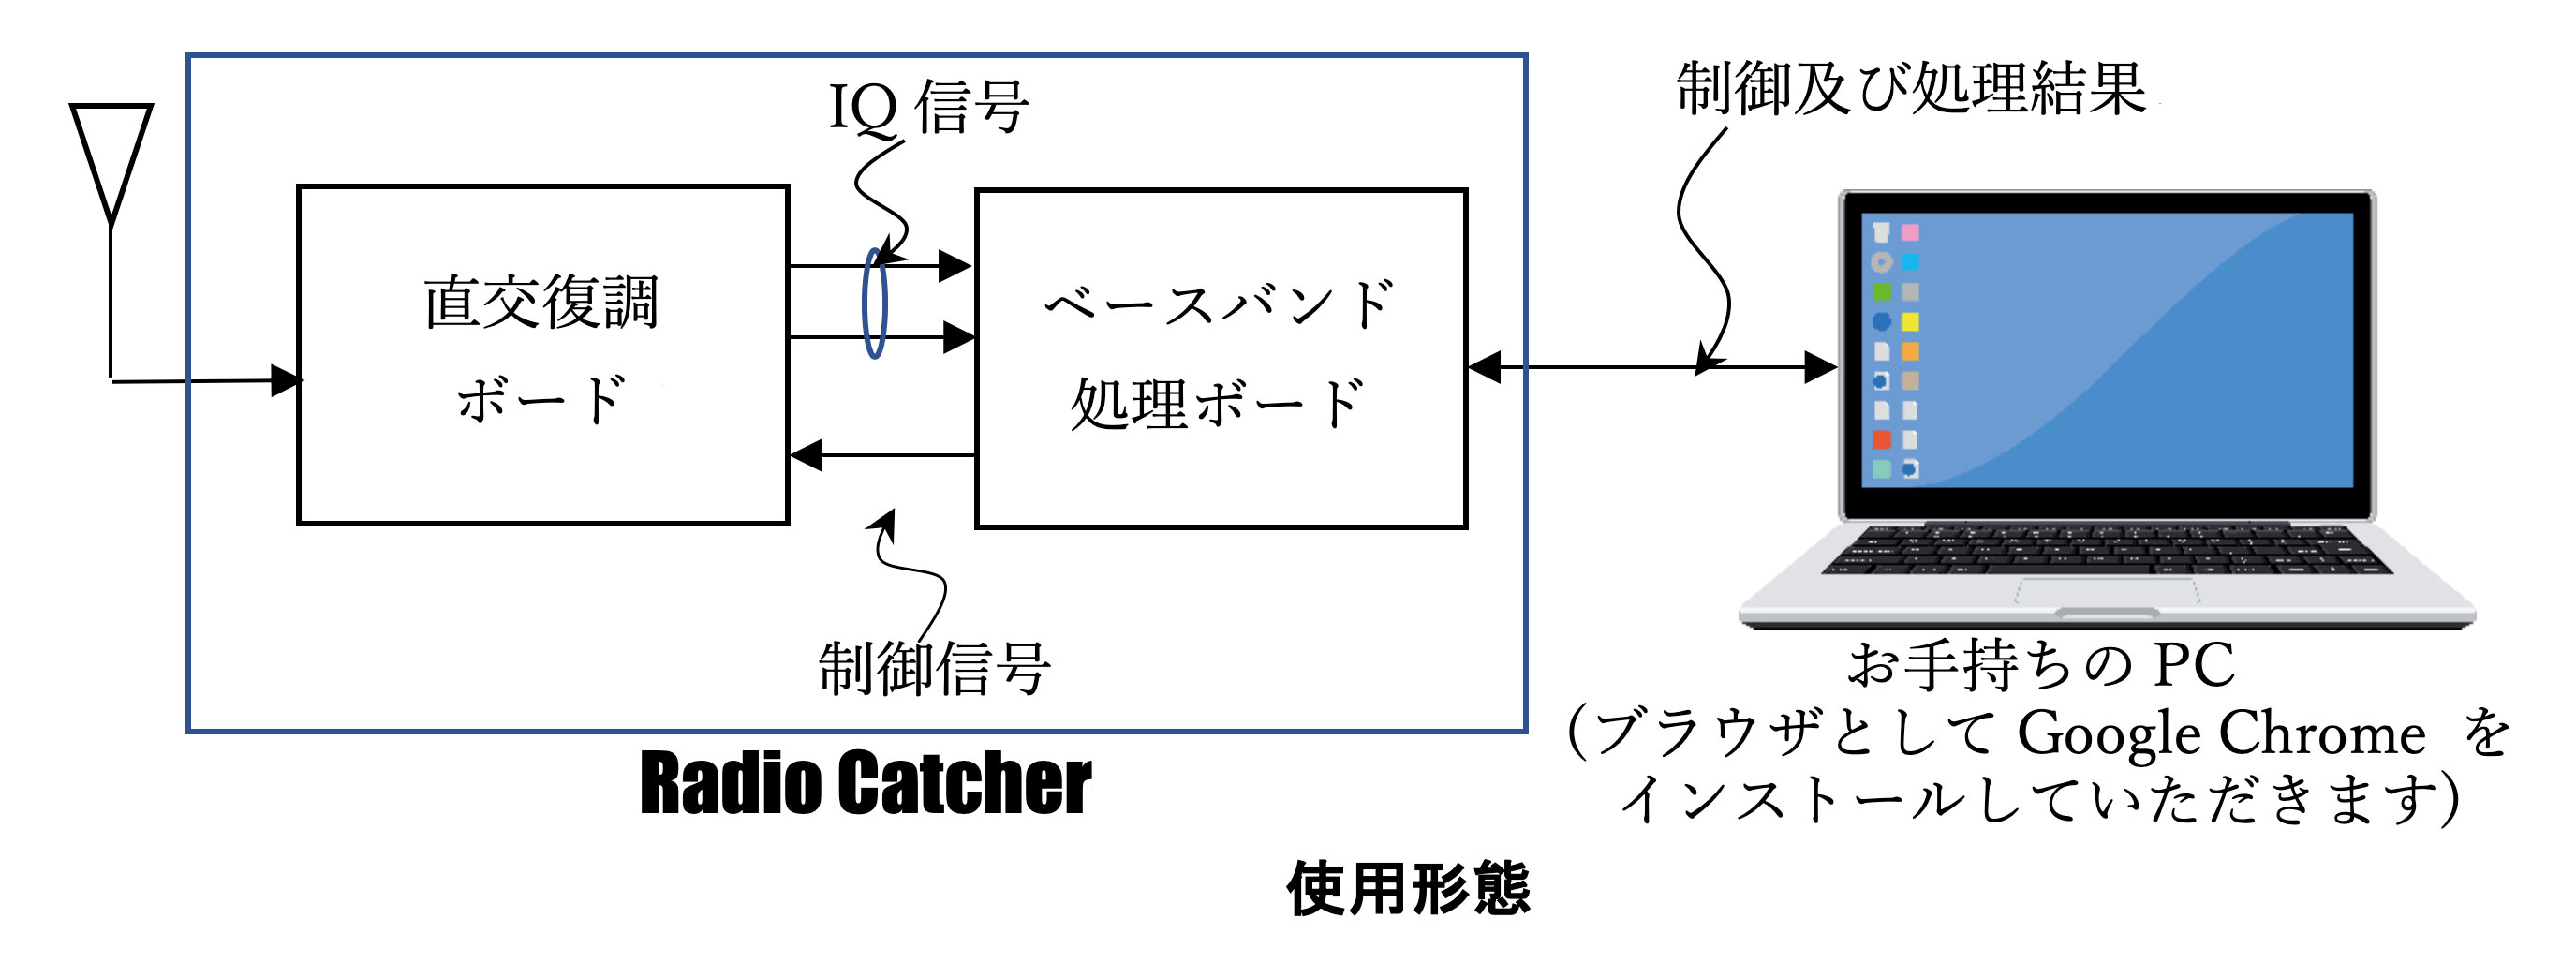 Radio Catcher 使用形態図